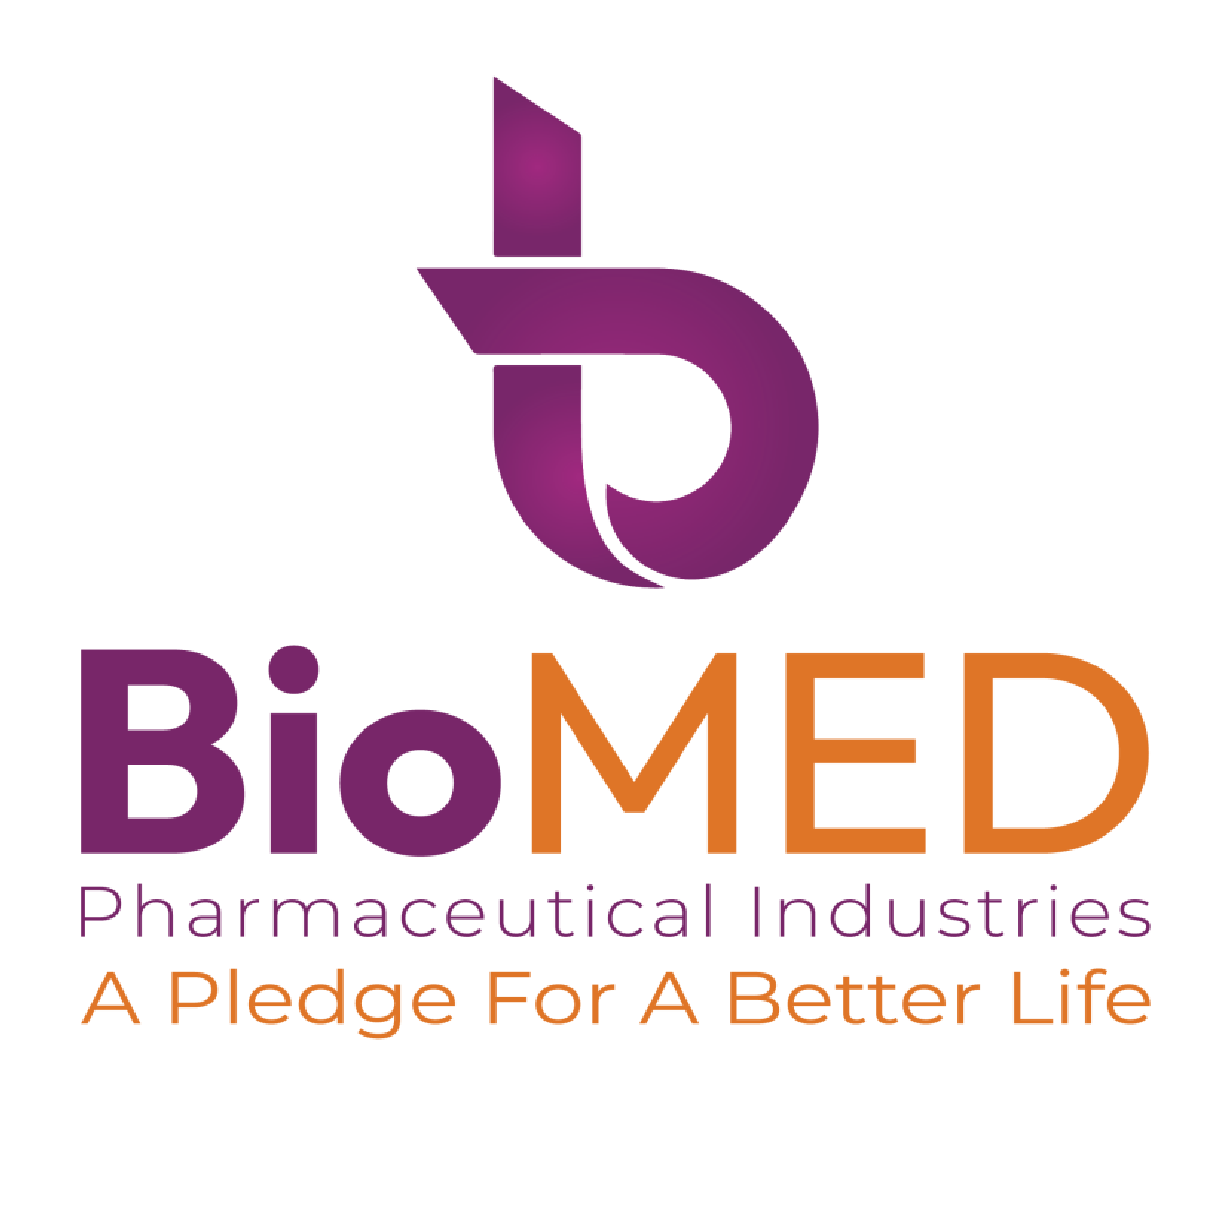 Biomed Pharmaceutical industries